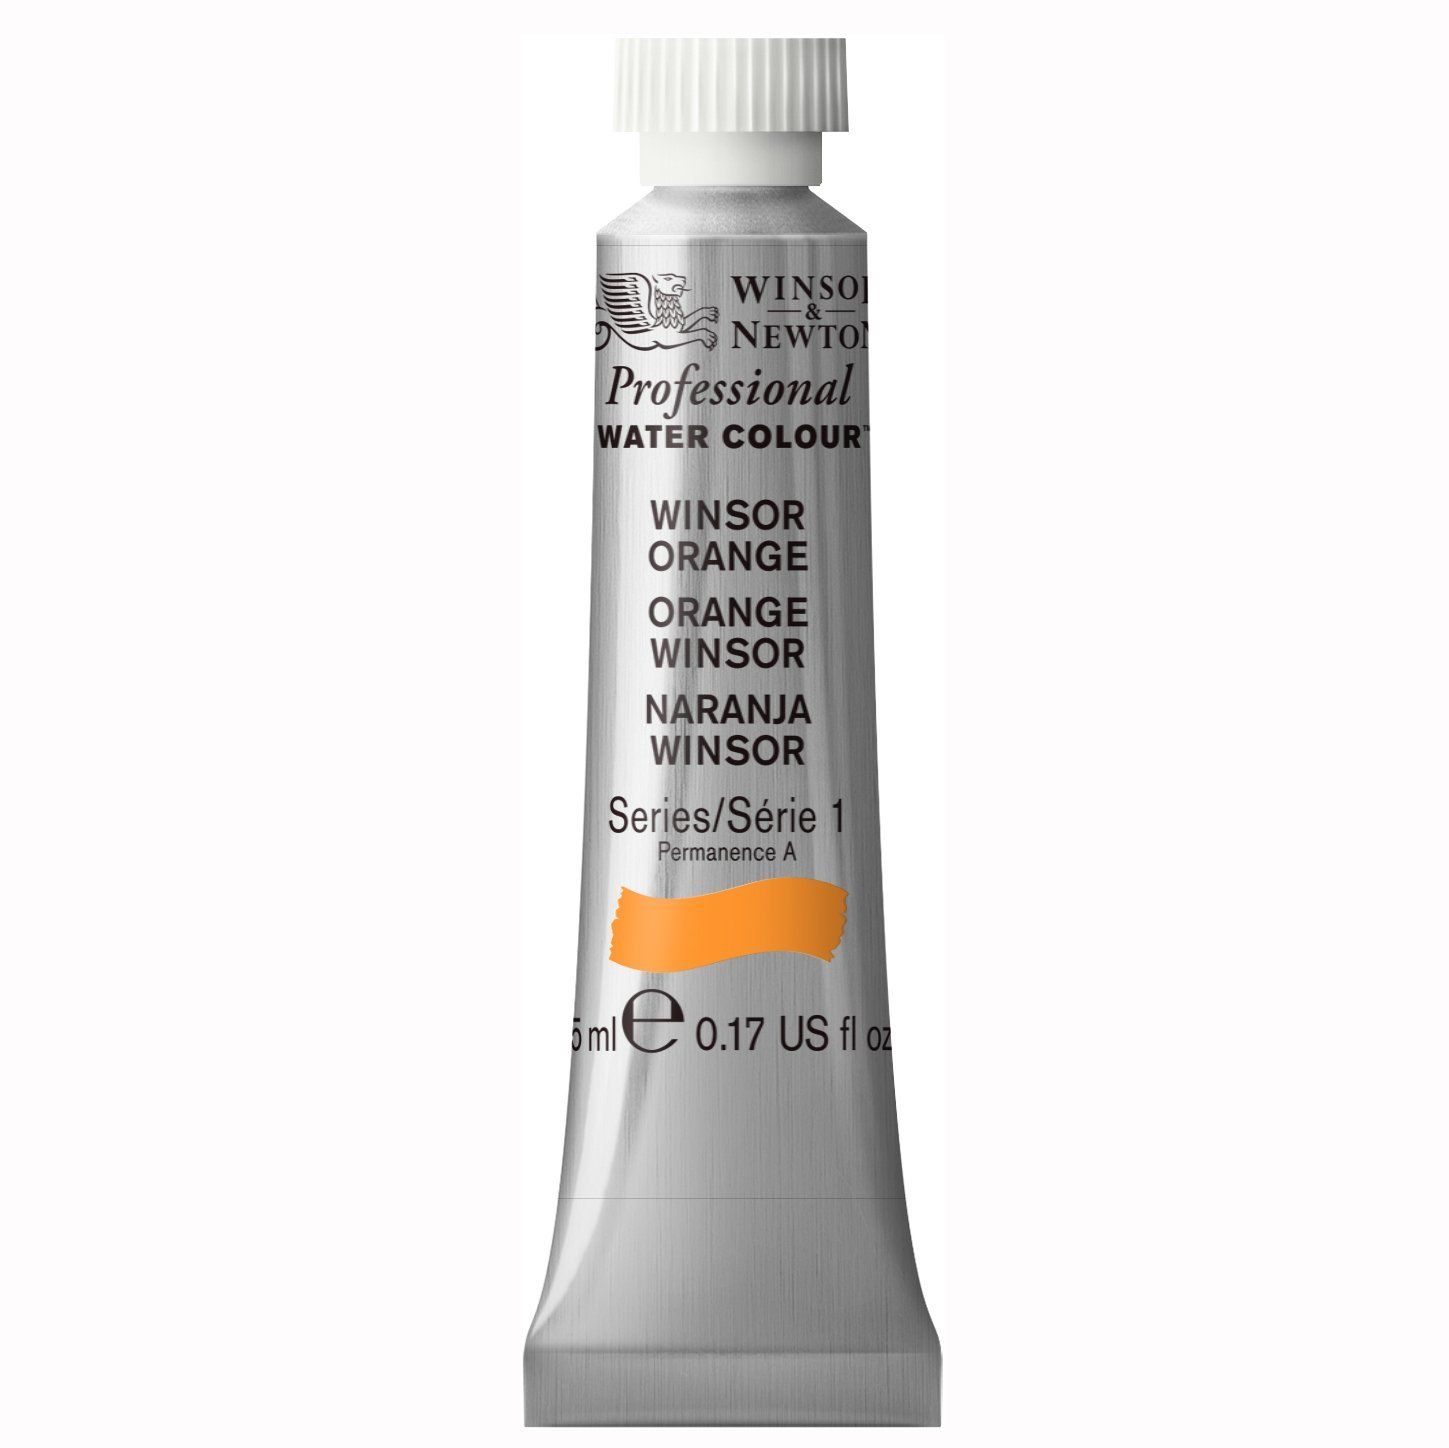 Winsor & Newton Watercolour Paint - Winsor Orange 5ml